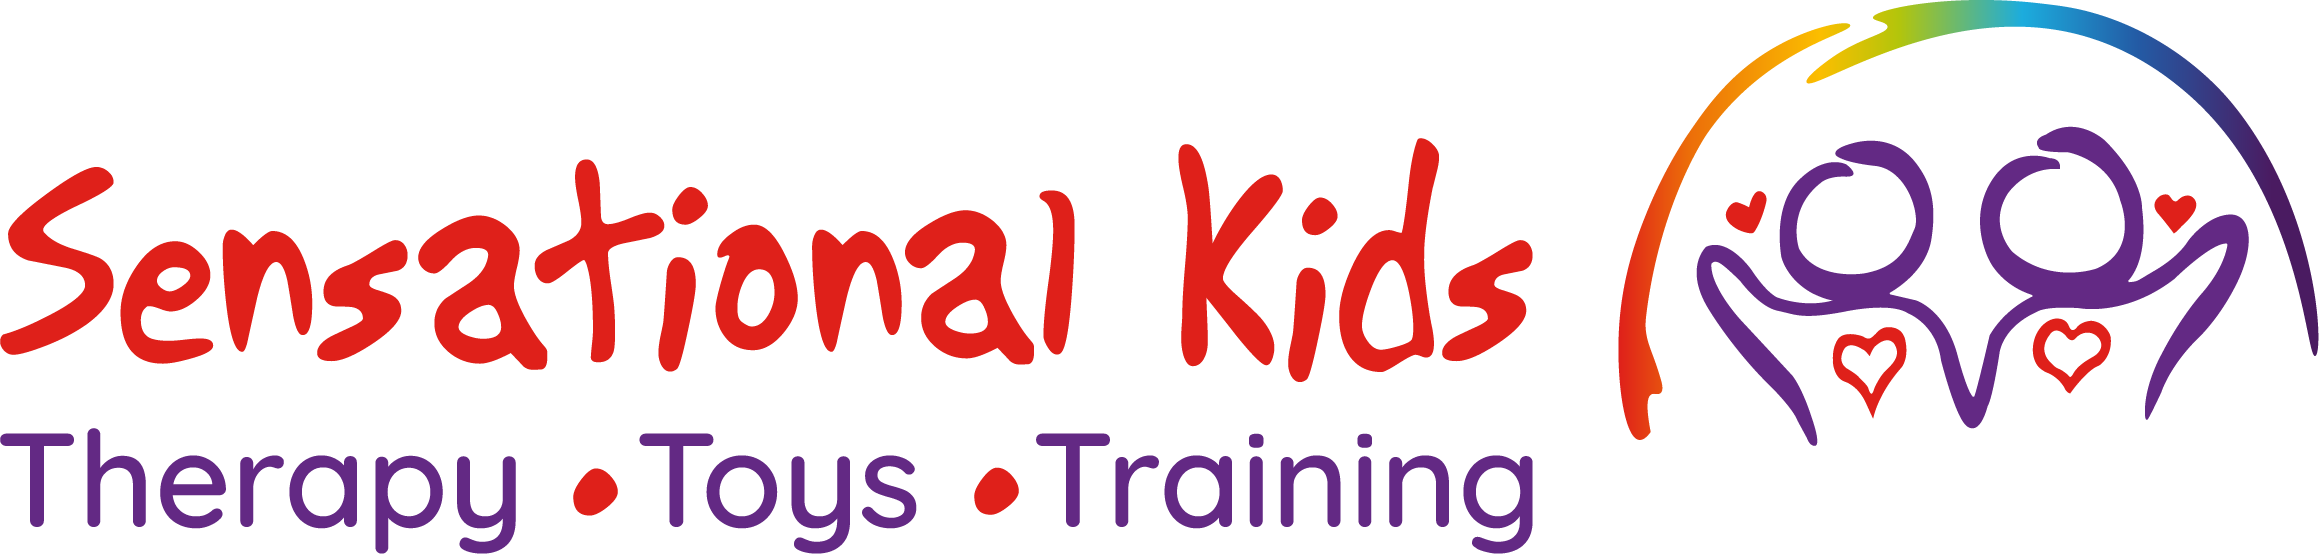 Sensational Kids logo